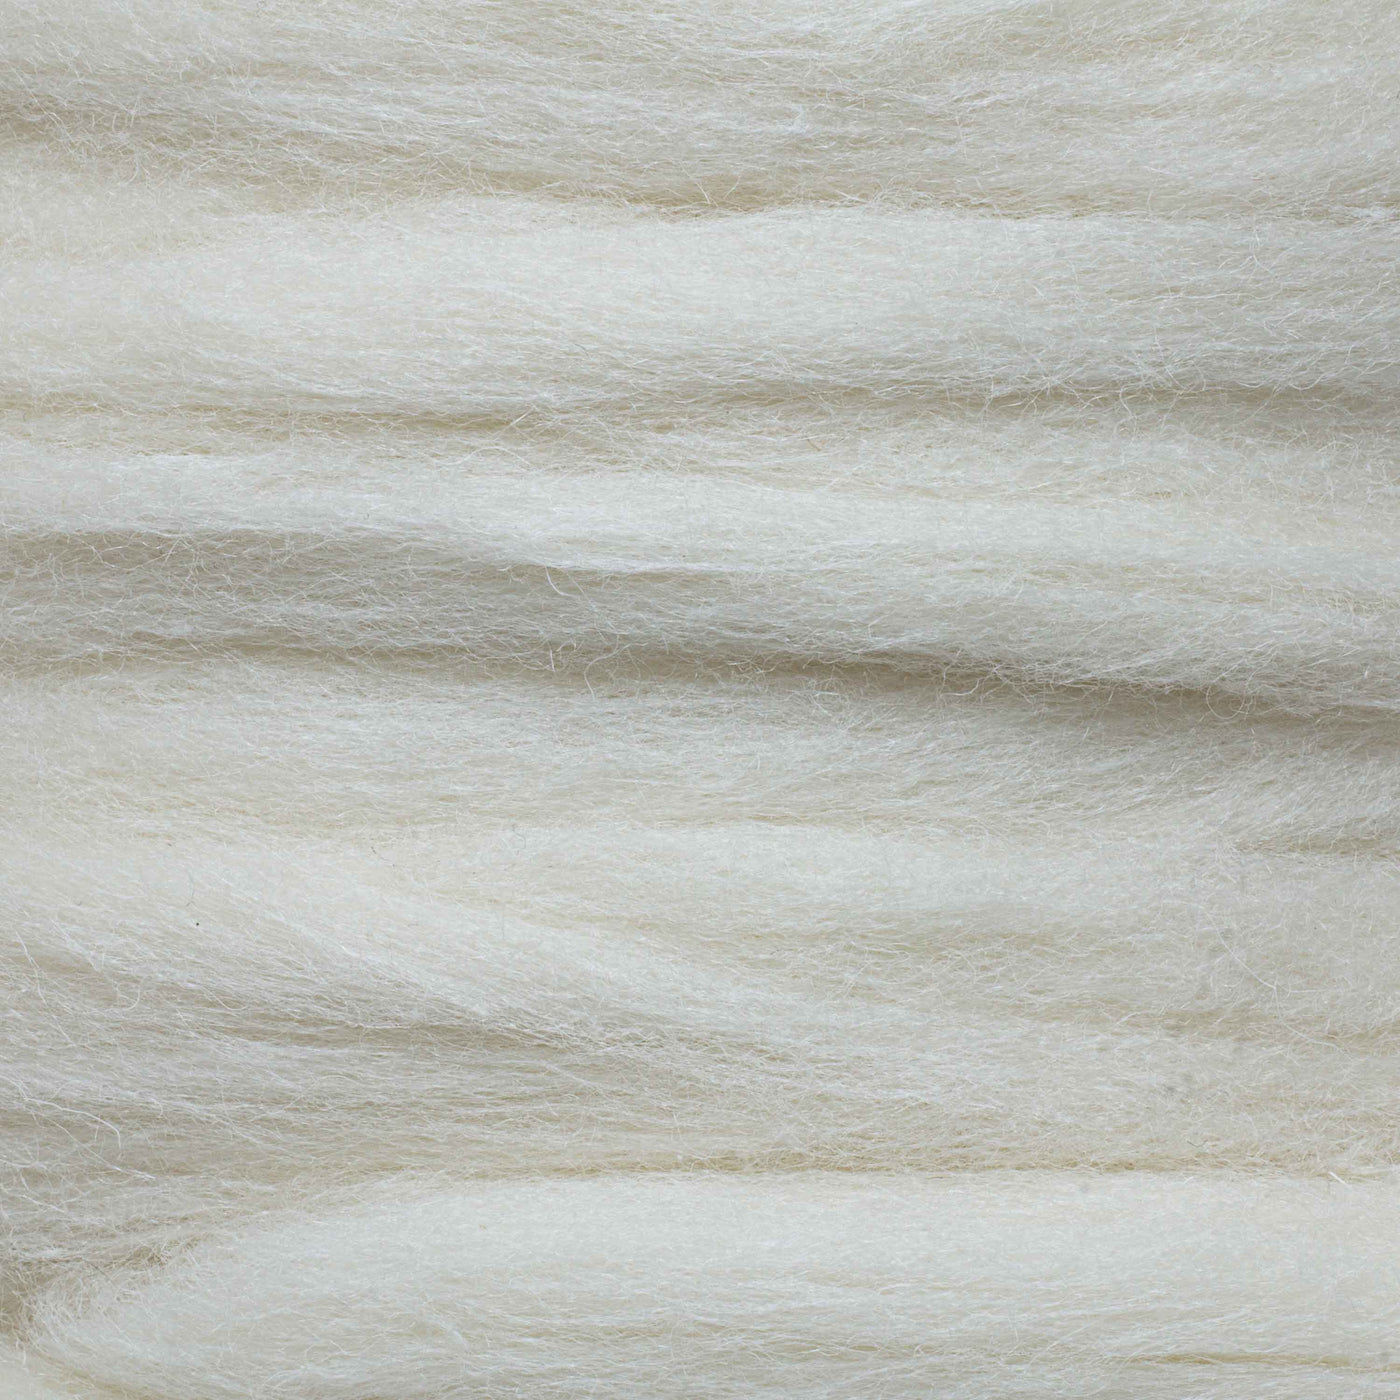 Buy Eri Silk Fiber online India - Muezart India - Silk Fiber Price - Process Silk Fiber Eri Silk Fiber Top - Buy Natural Silk Fiber Online - Fiber Silk - Fiber for Yarn - Degummed Cocoons -Cocoon Cakes - Eri Muga Silk Fiber - Eri Top FIber - Eri Roving